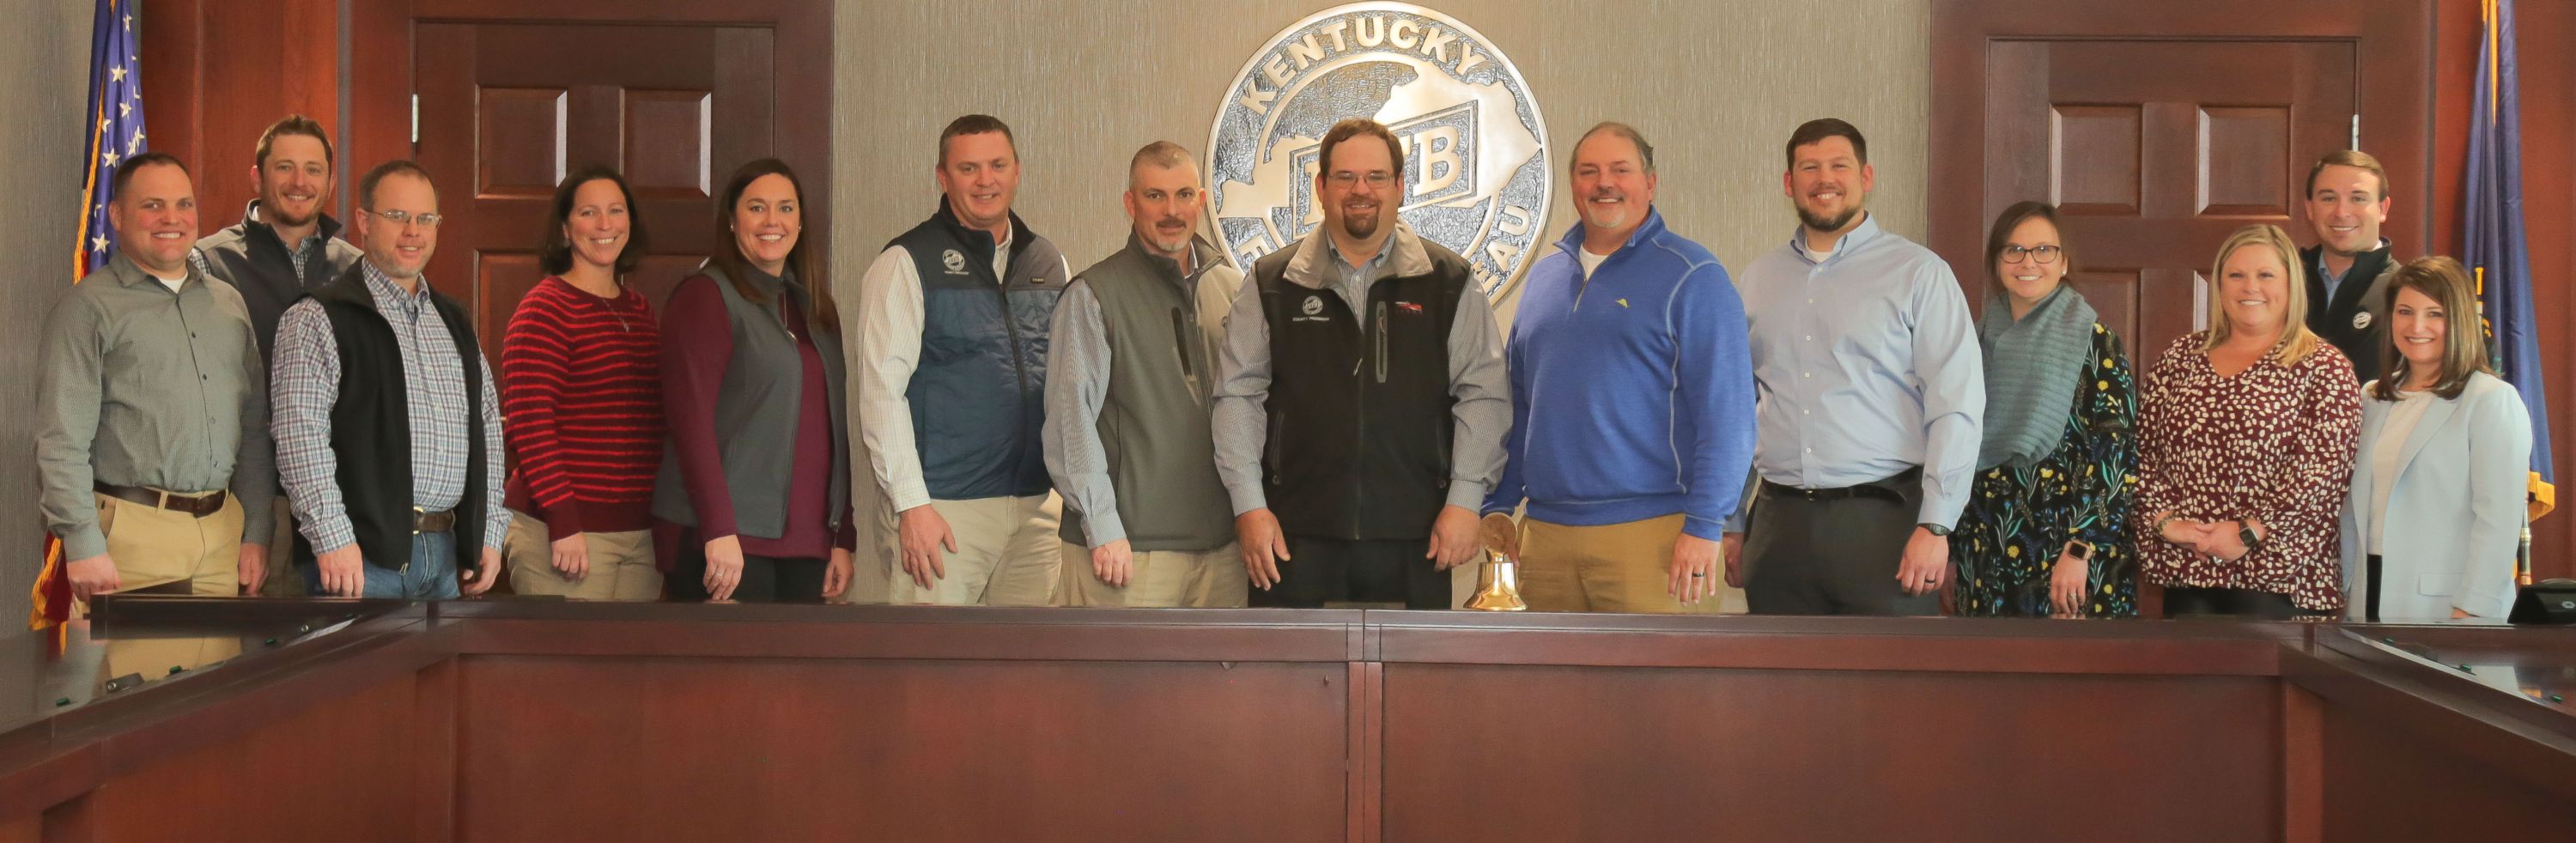 Kentucky Farm Bureau's "Generation Bridge" Leadership Committee